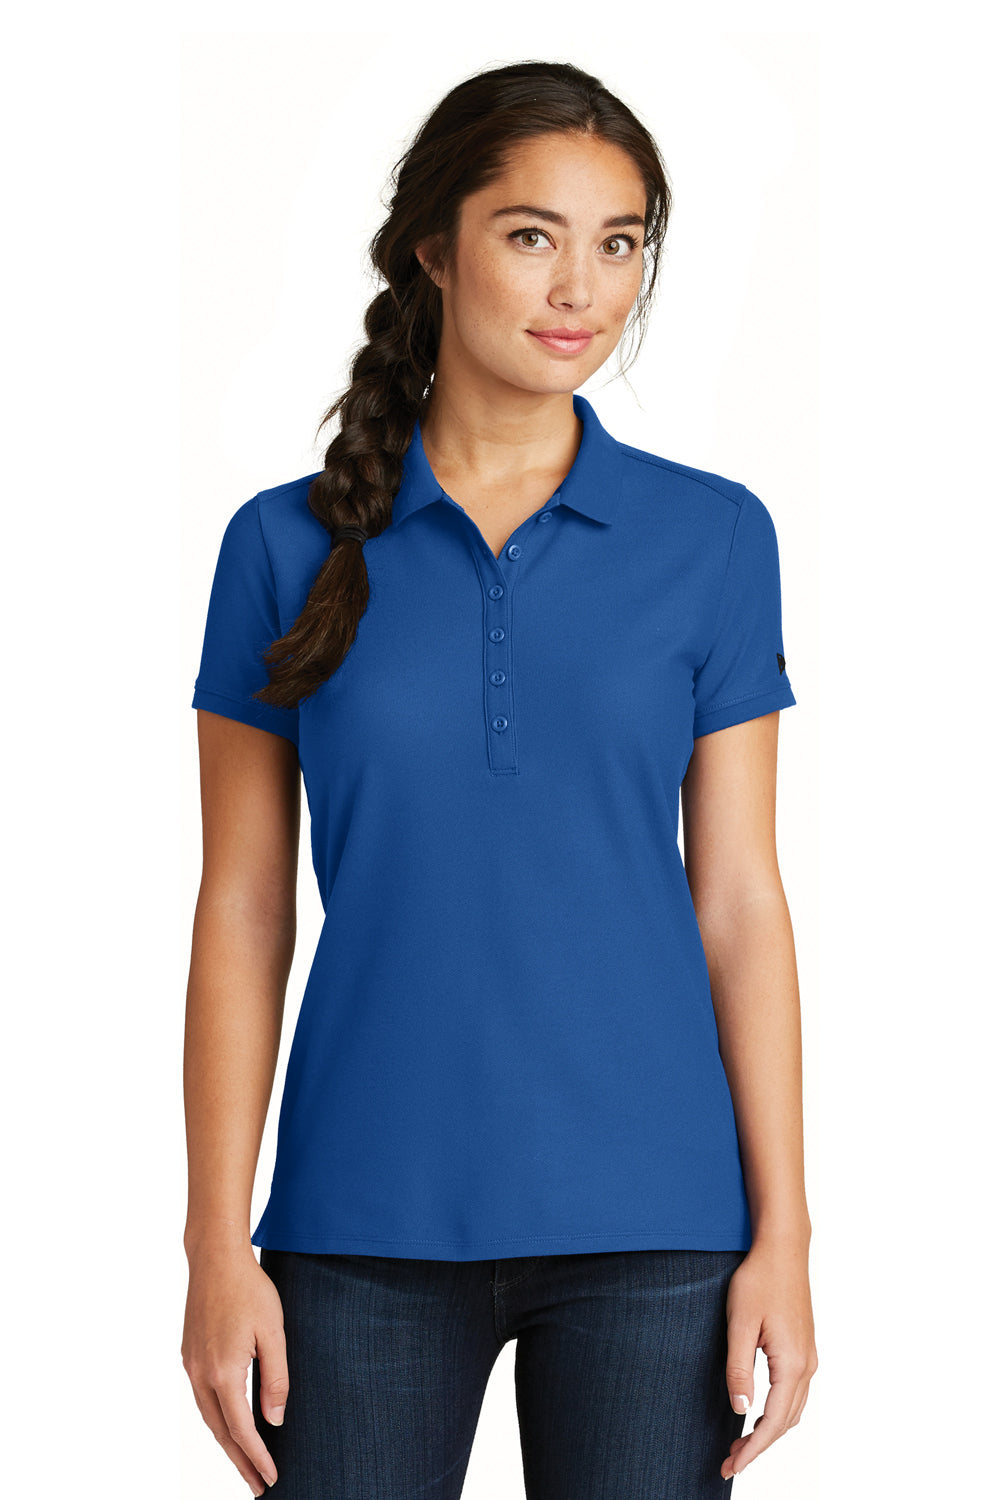 New Era LNEA300 Womens Venue Home Plate Moisture Wicking Short Sleeve Polo Shirt Royal Blue Front